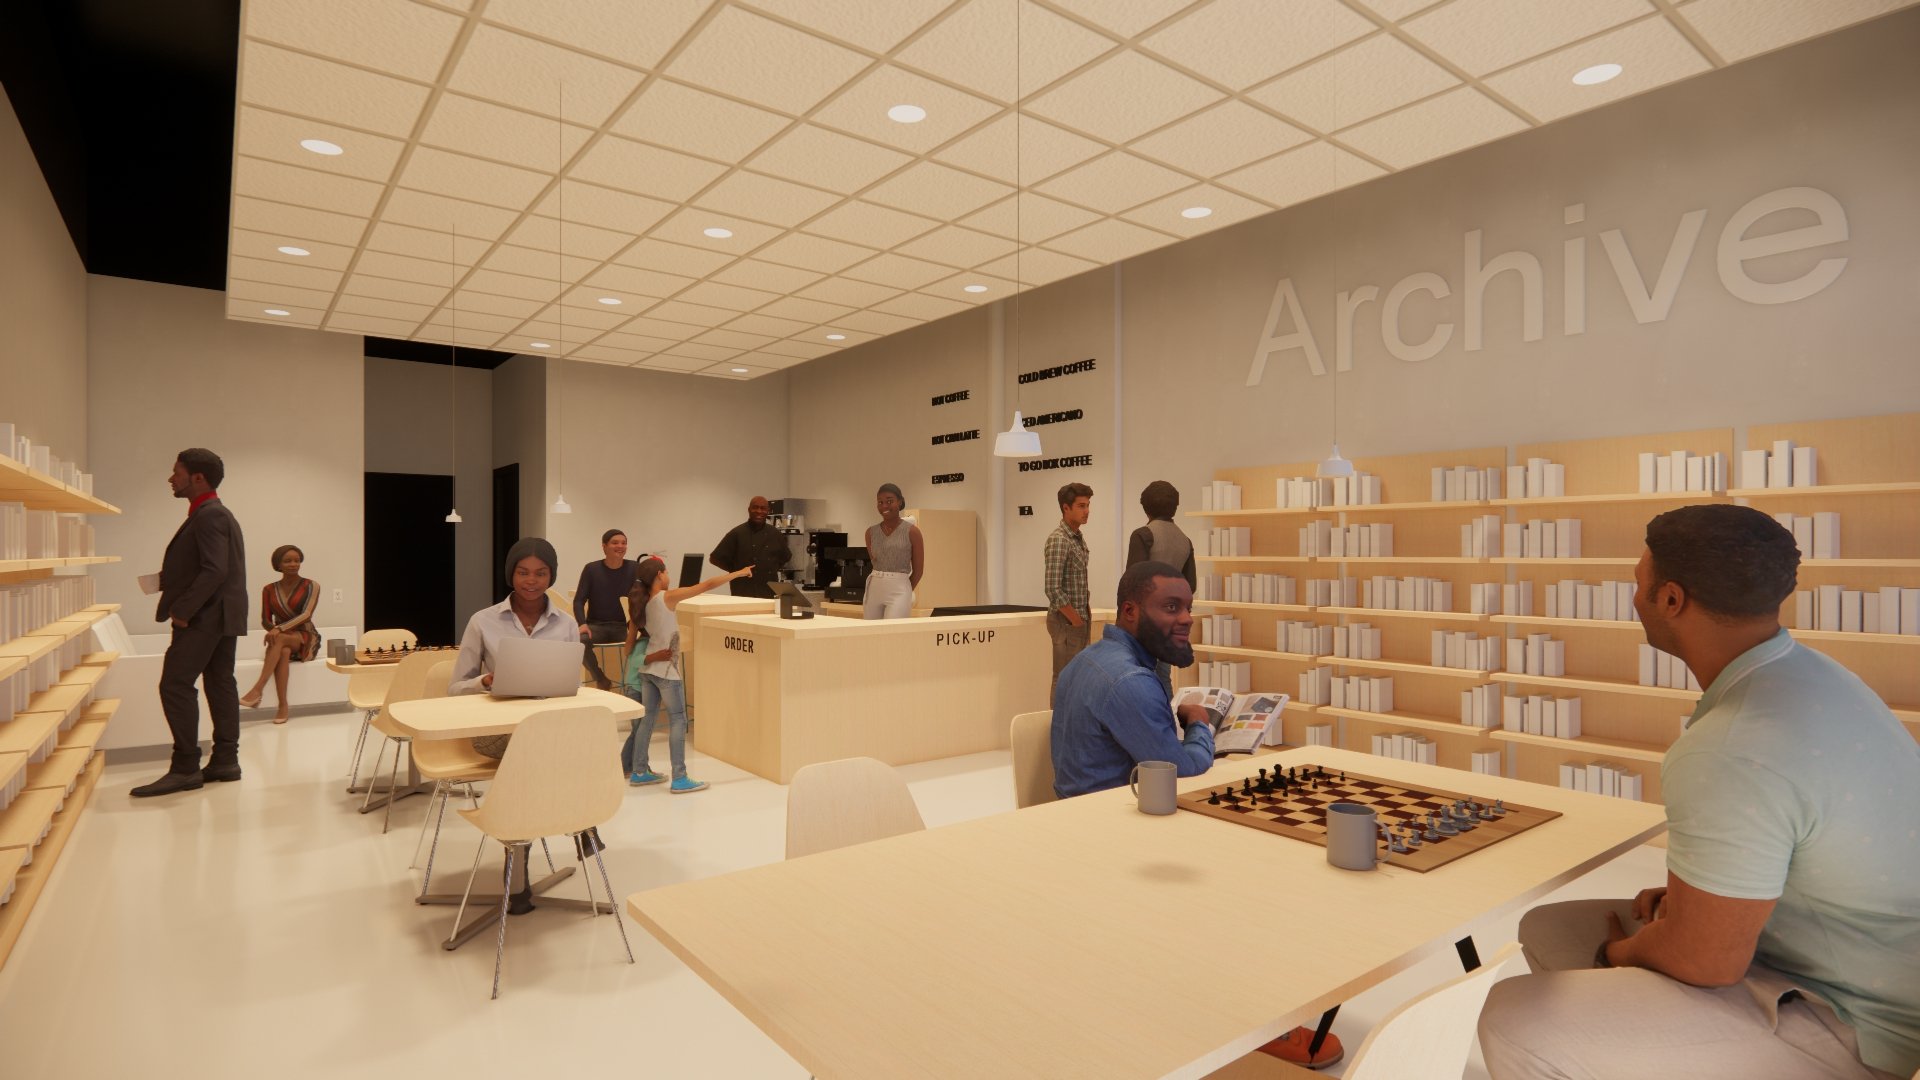 JR Architect Design- Archive bookstore coffee bar - Beattie Ford Rd Charlotte NC.jpg